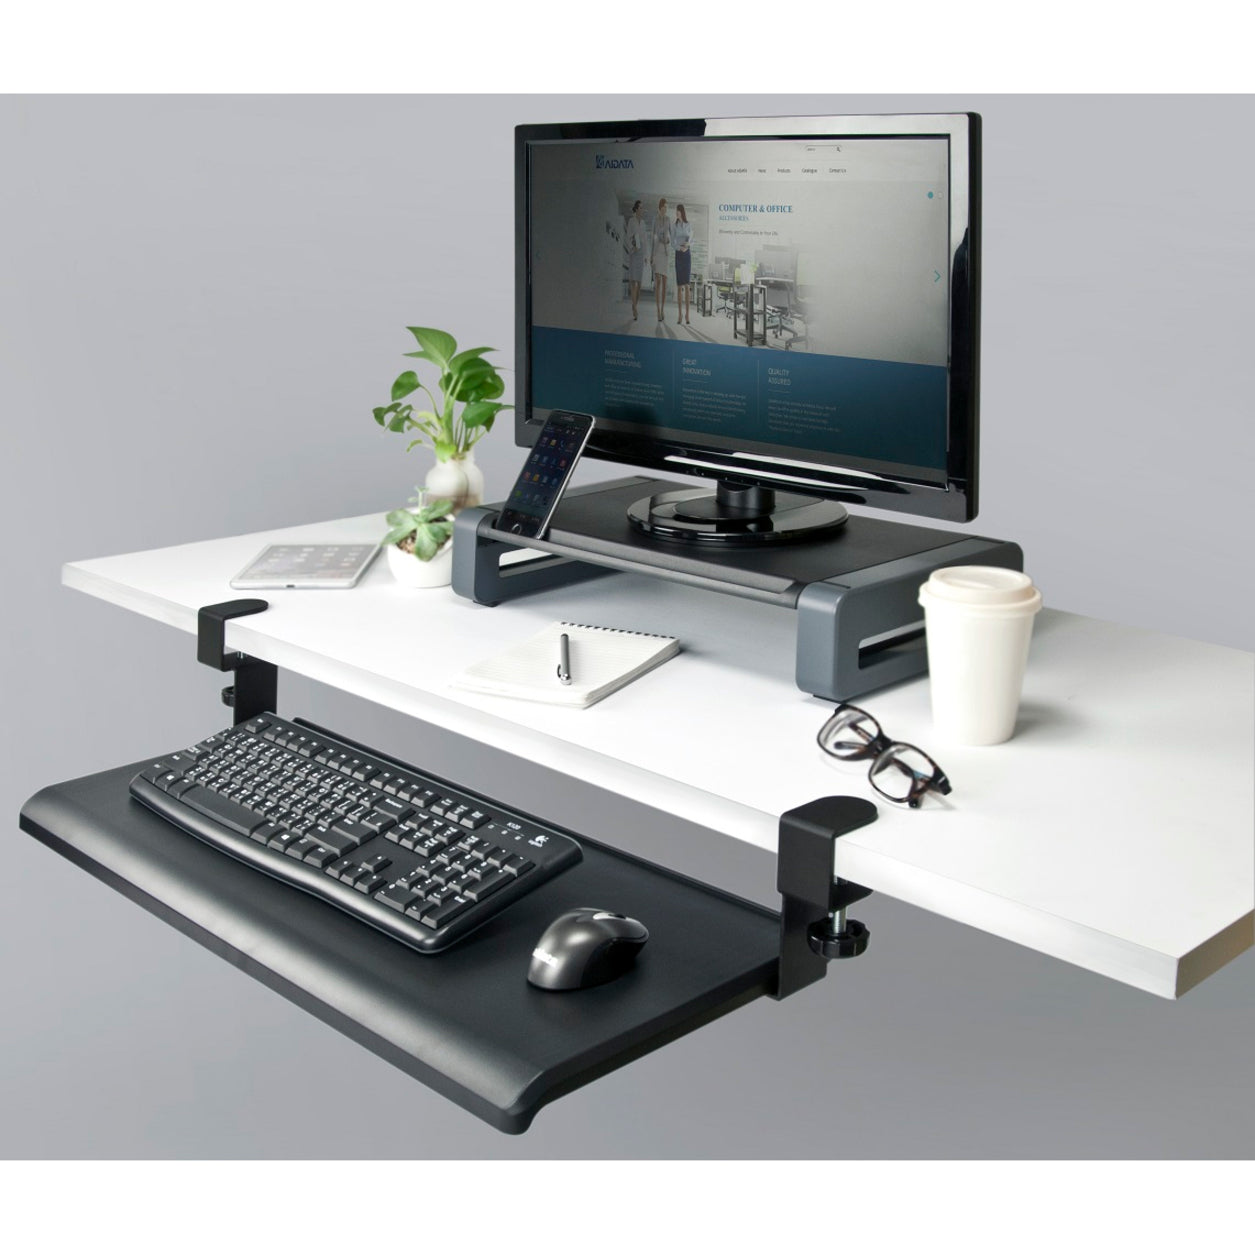 Ergoguys KB-1010 Extra-Wide Desk Clamp Keyboard Tray, Desk Mountable, Black